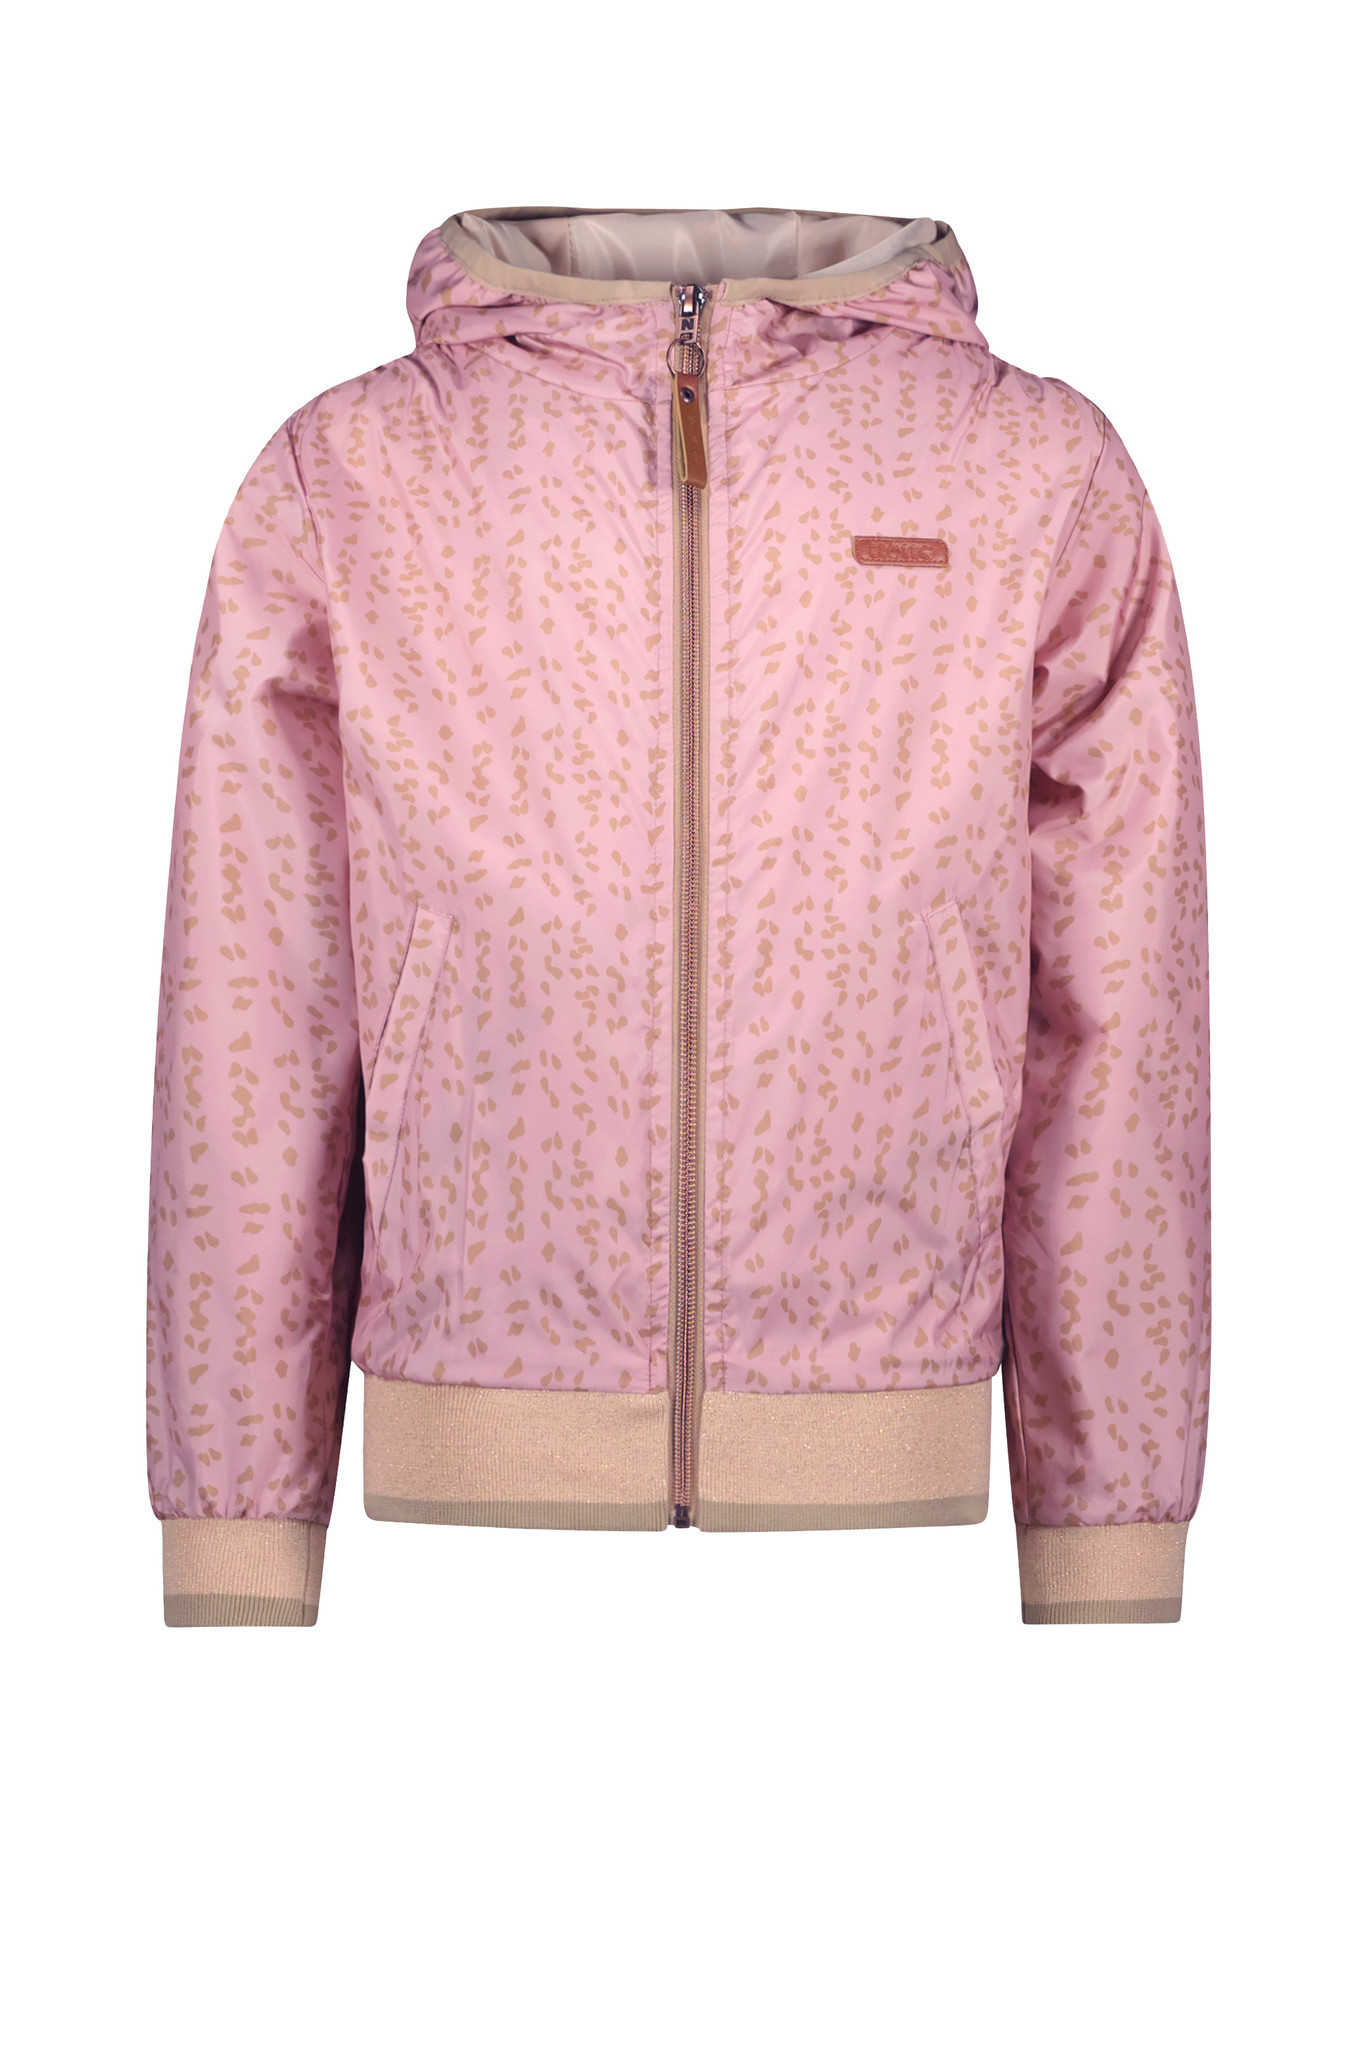 top Vergevingsgezind Boer NoNo - Meisjes zomerjas met capuchon - Becky - Vintage roze -  merkmeisjeskleding.nl